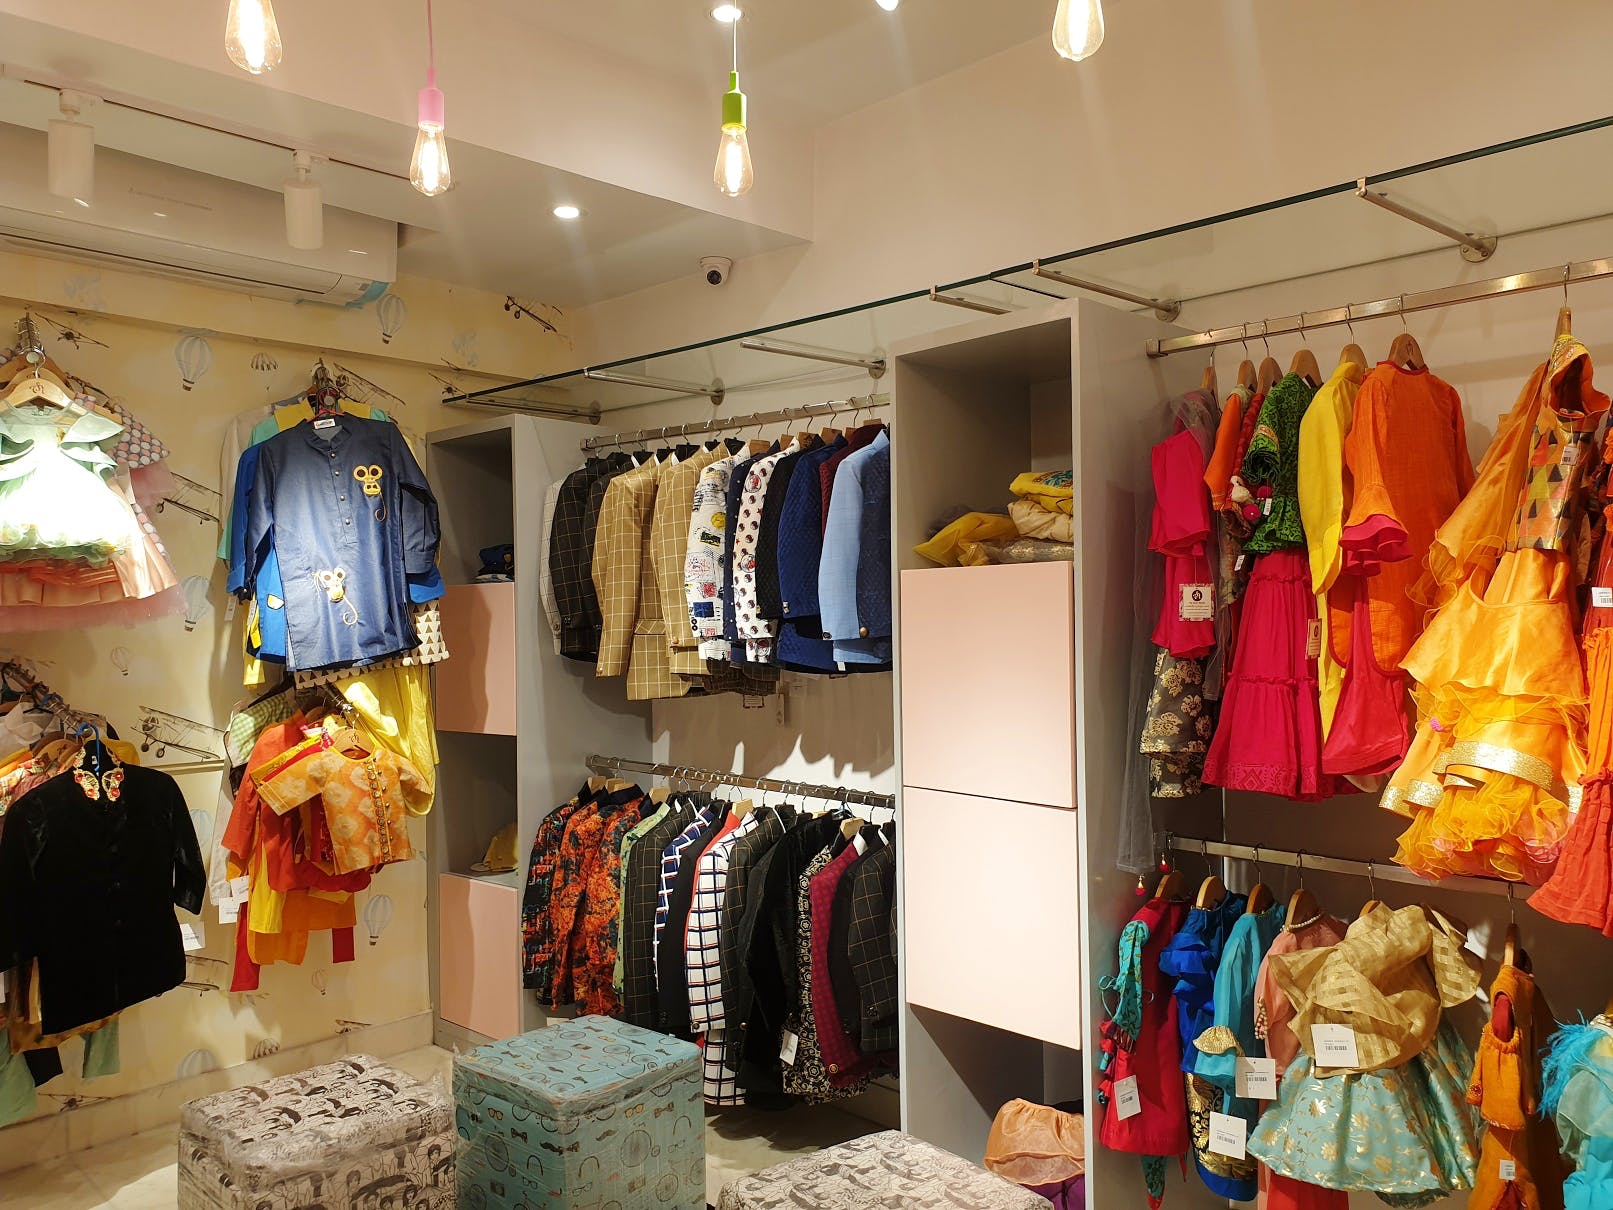 Boutique,Outlet store,Room,Fashion,Retail,Building,Textile,Closet,Interior design,Shopping